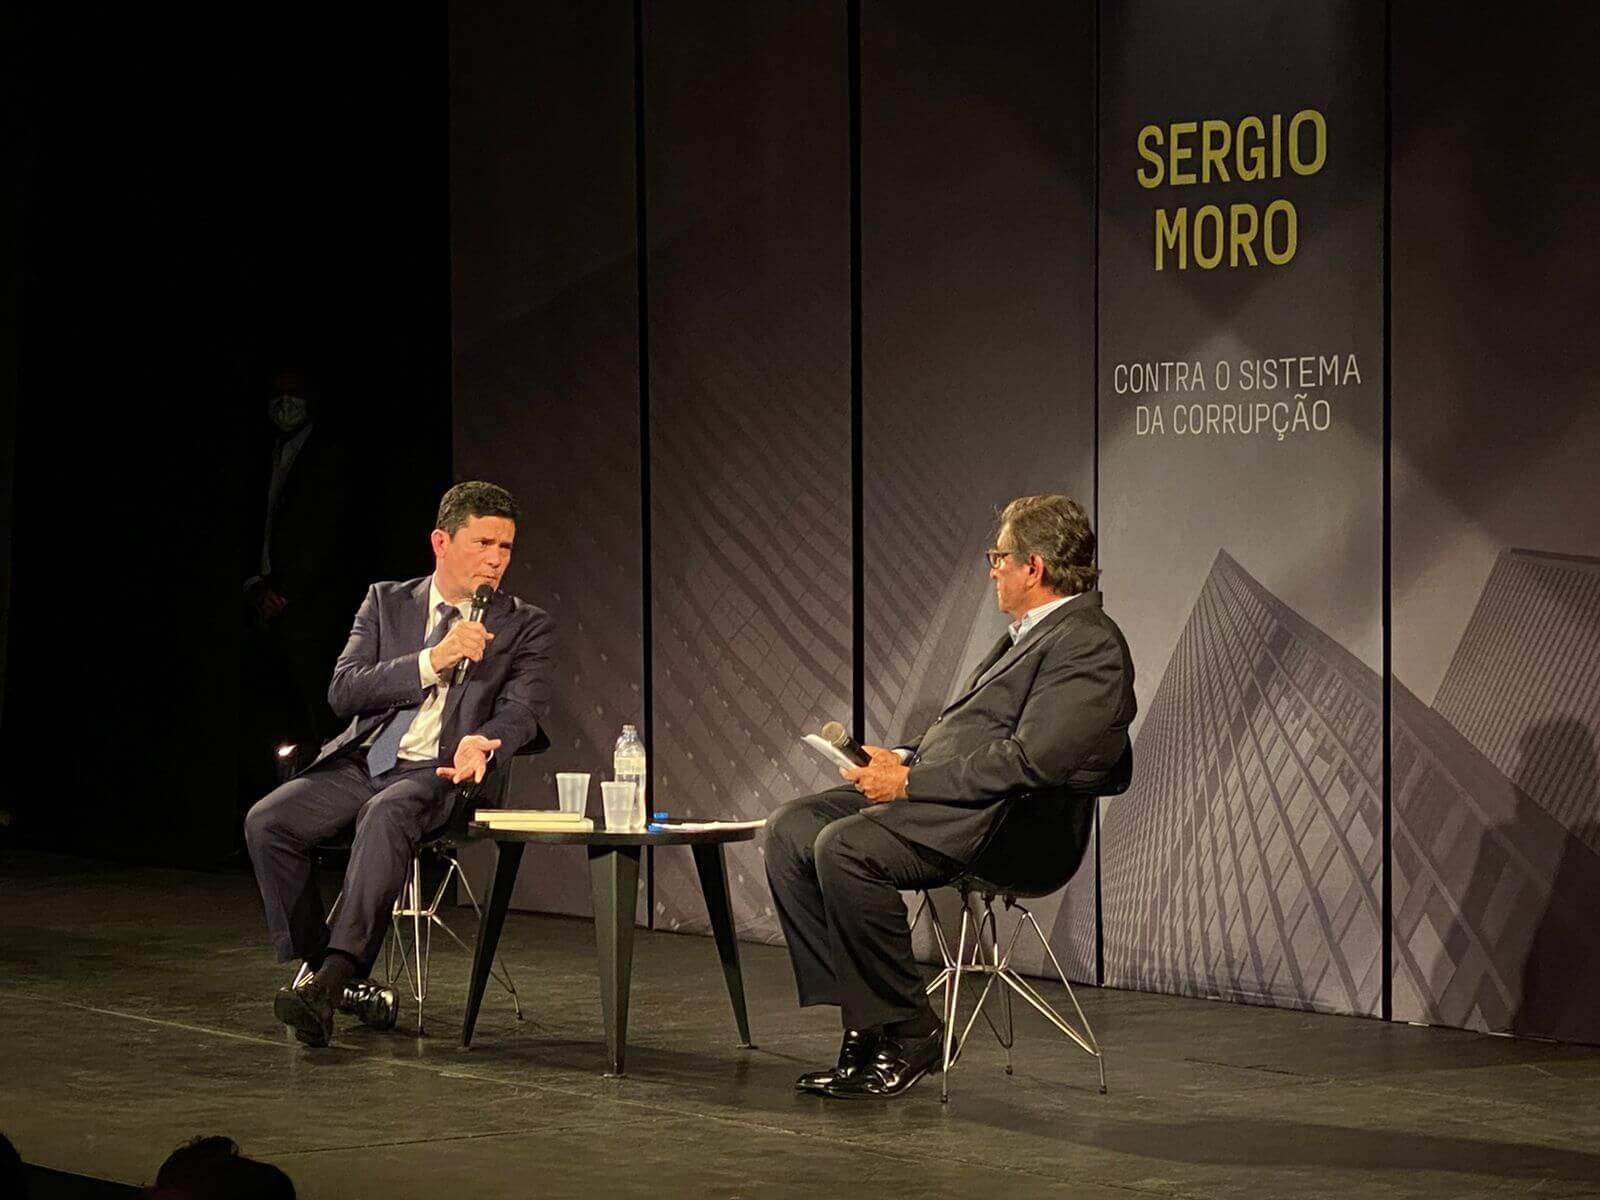 Sergio Moro lança livro no Rio